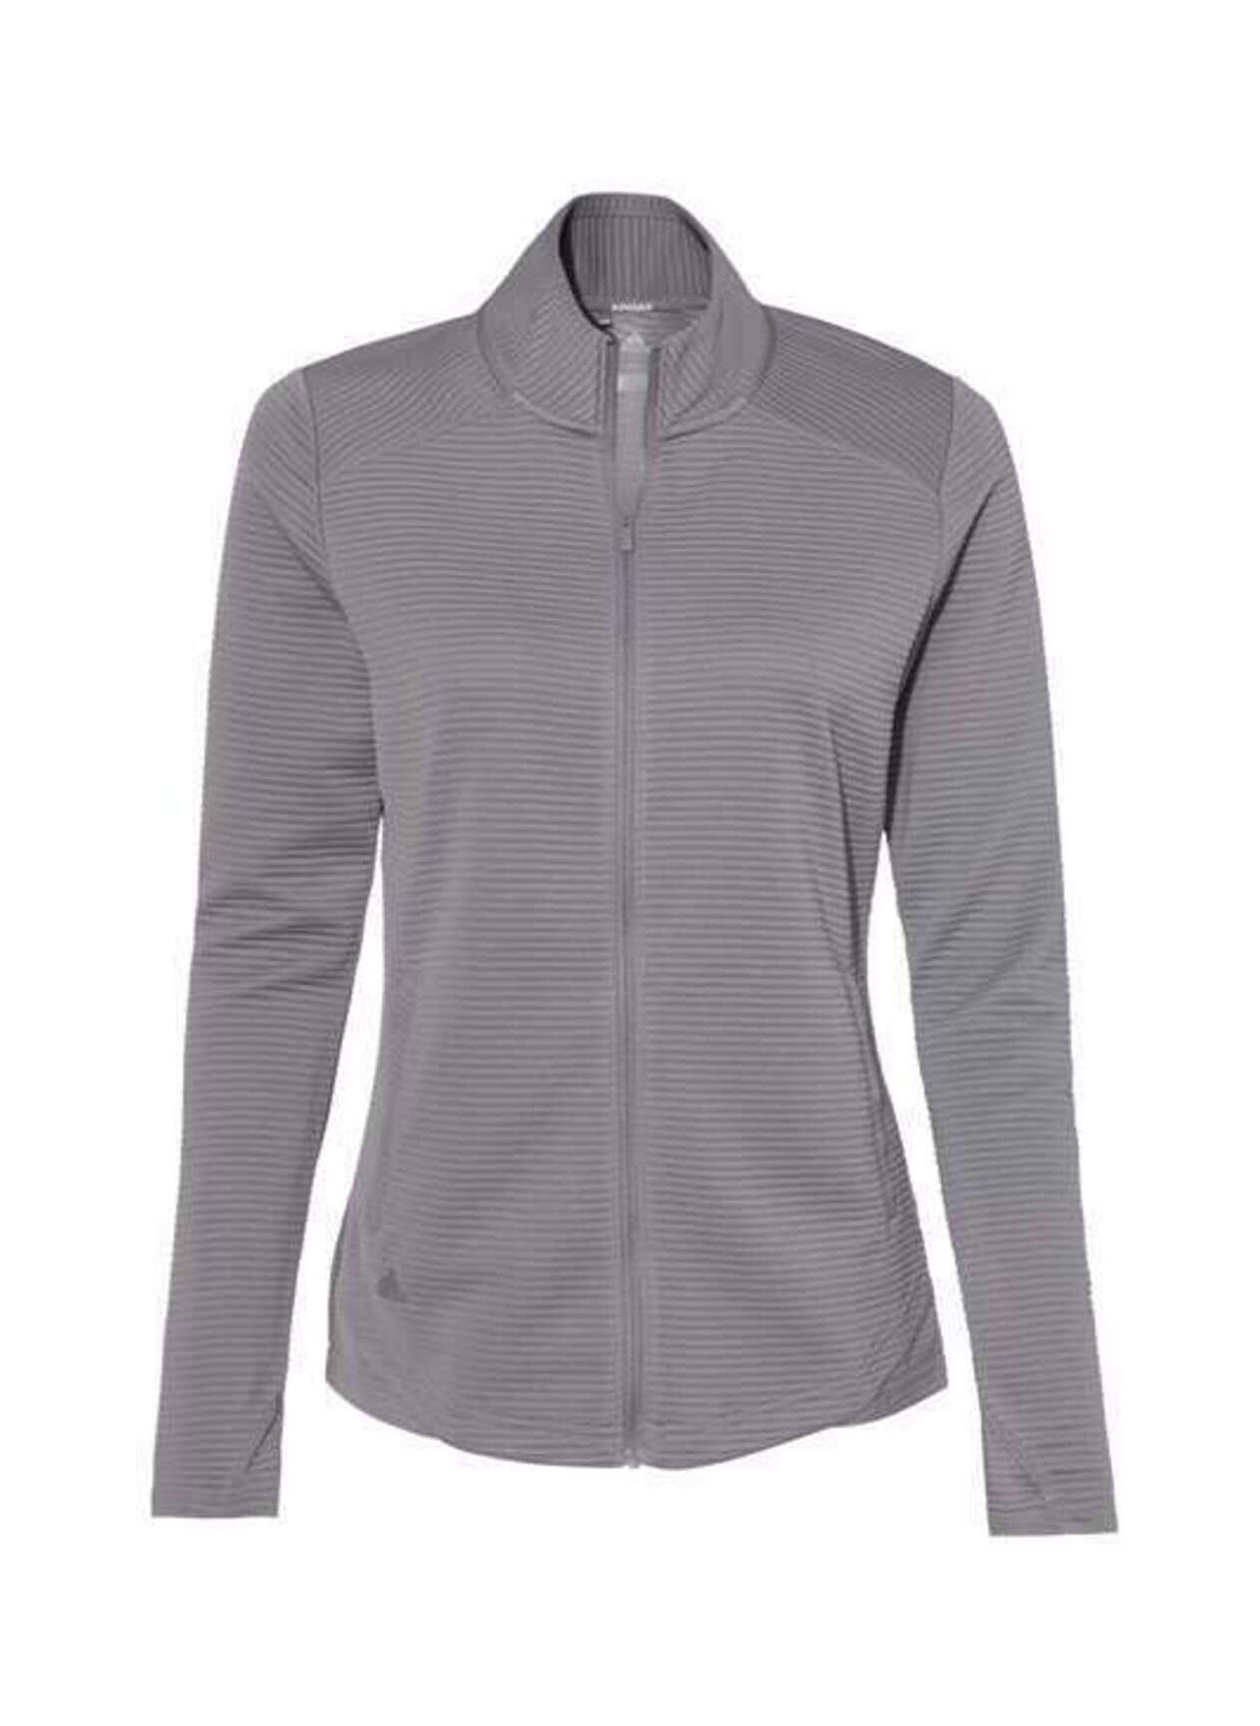 Adidas Women's Grey Textured Jacket